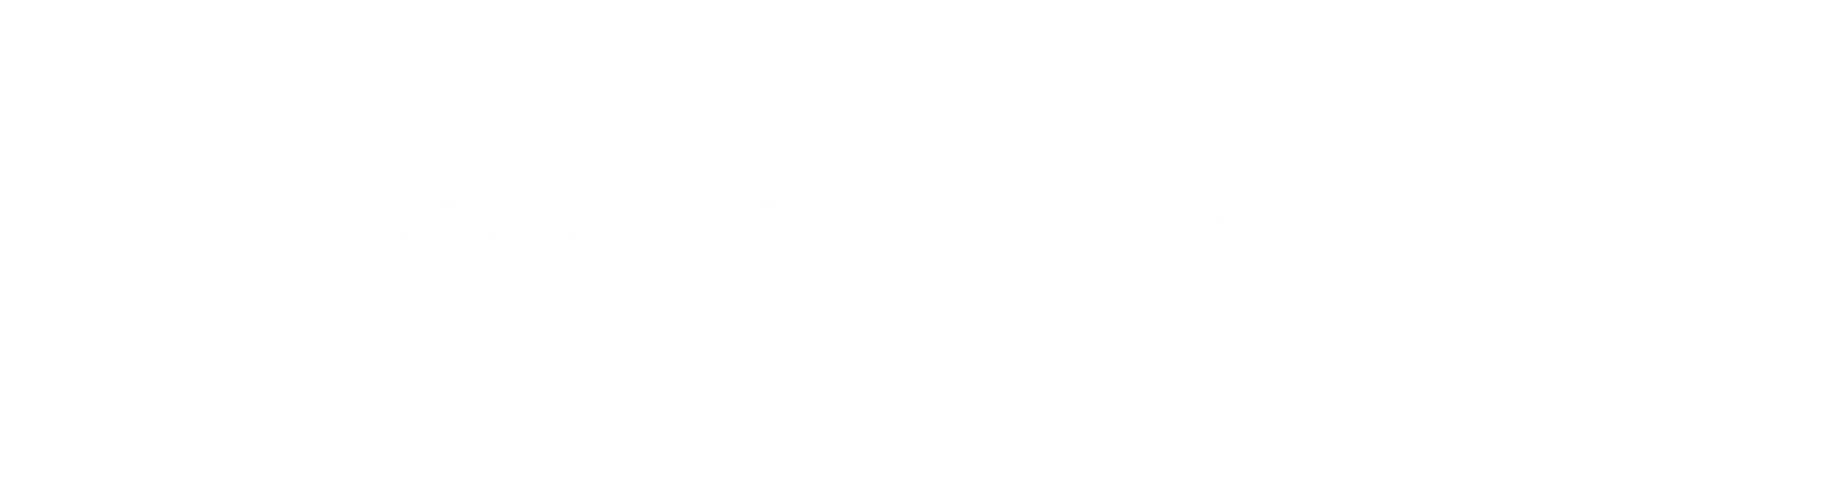 Blockchain Bytes Daily